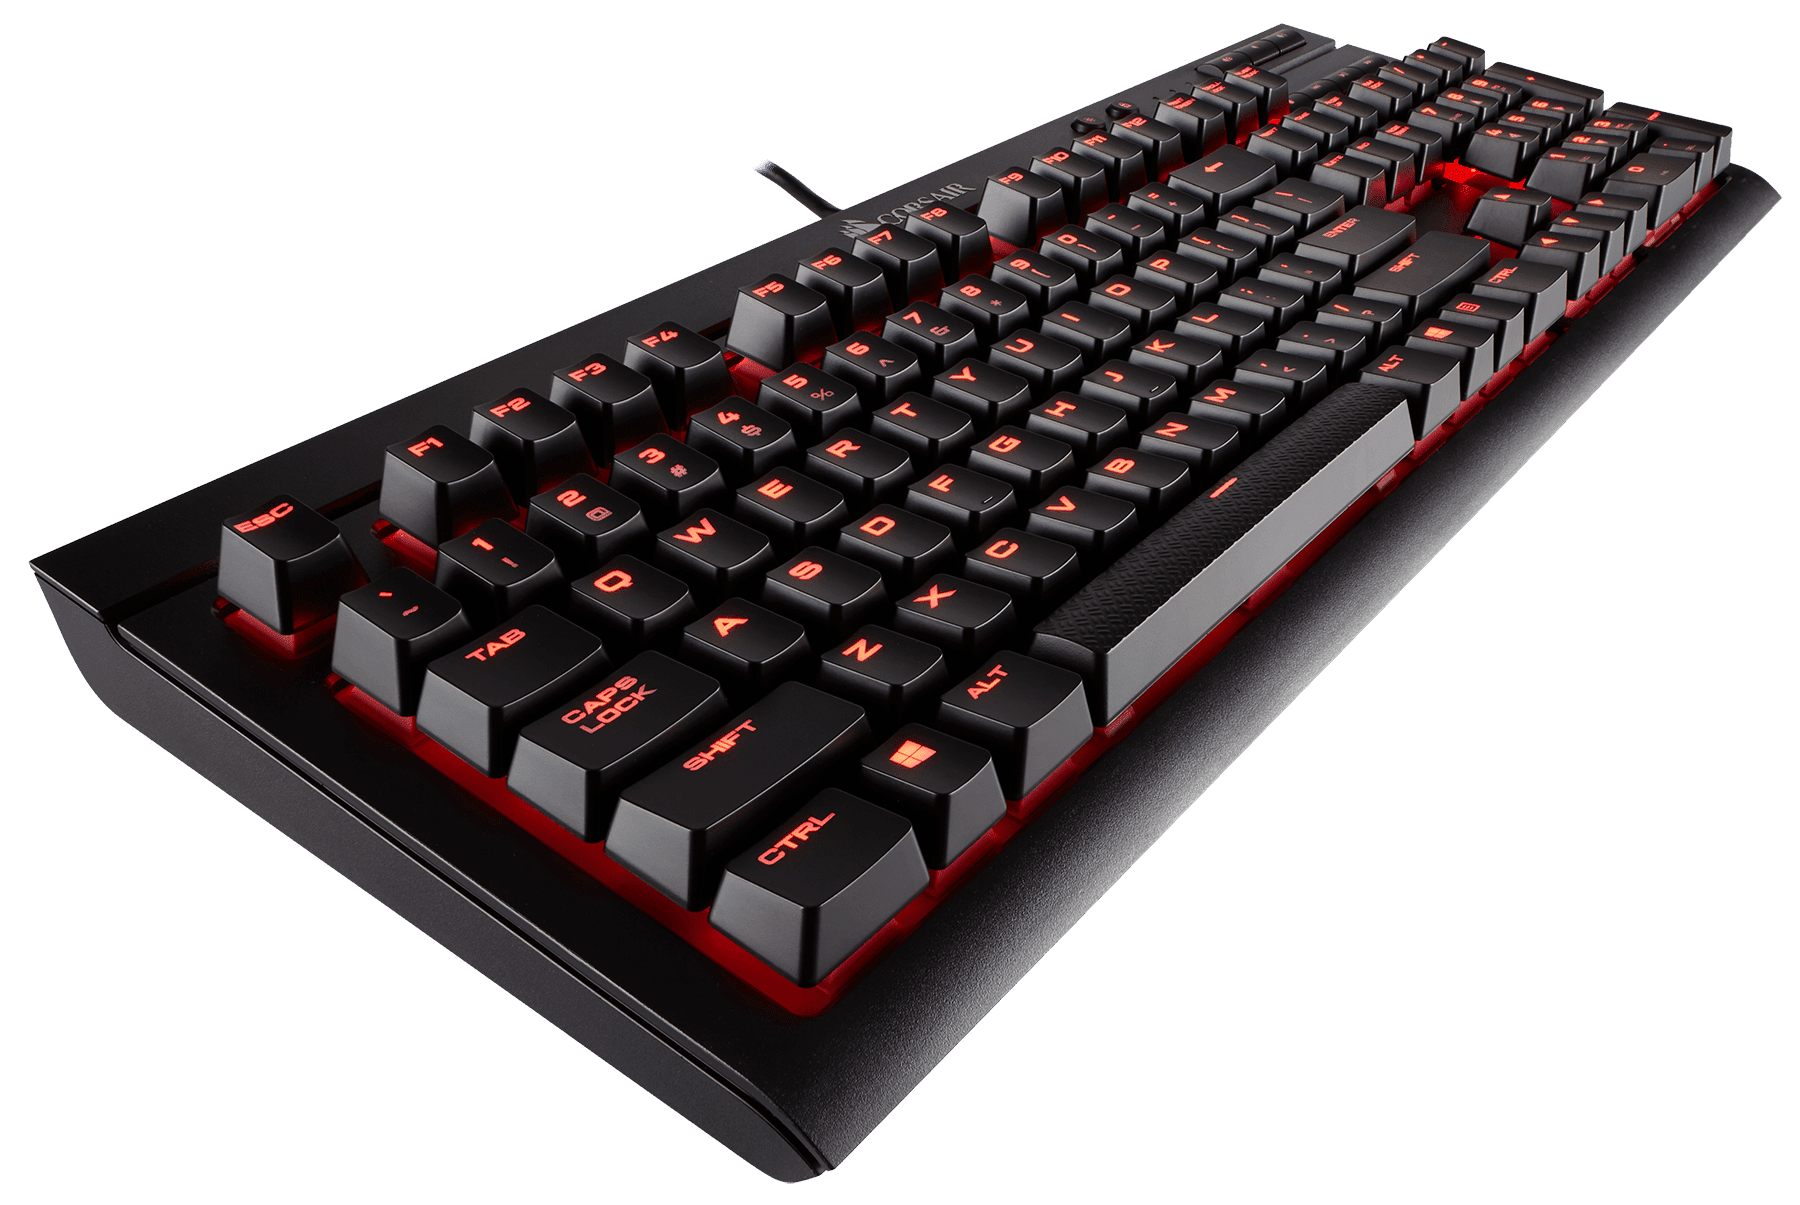 Corsair Gaming K68 Mechanical Keyboard, Backlit Red LED, Cherry Red - Walmart.com